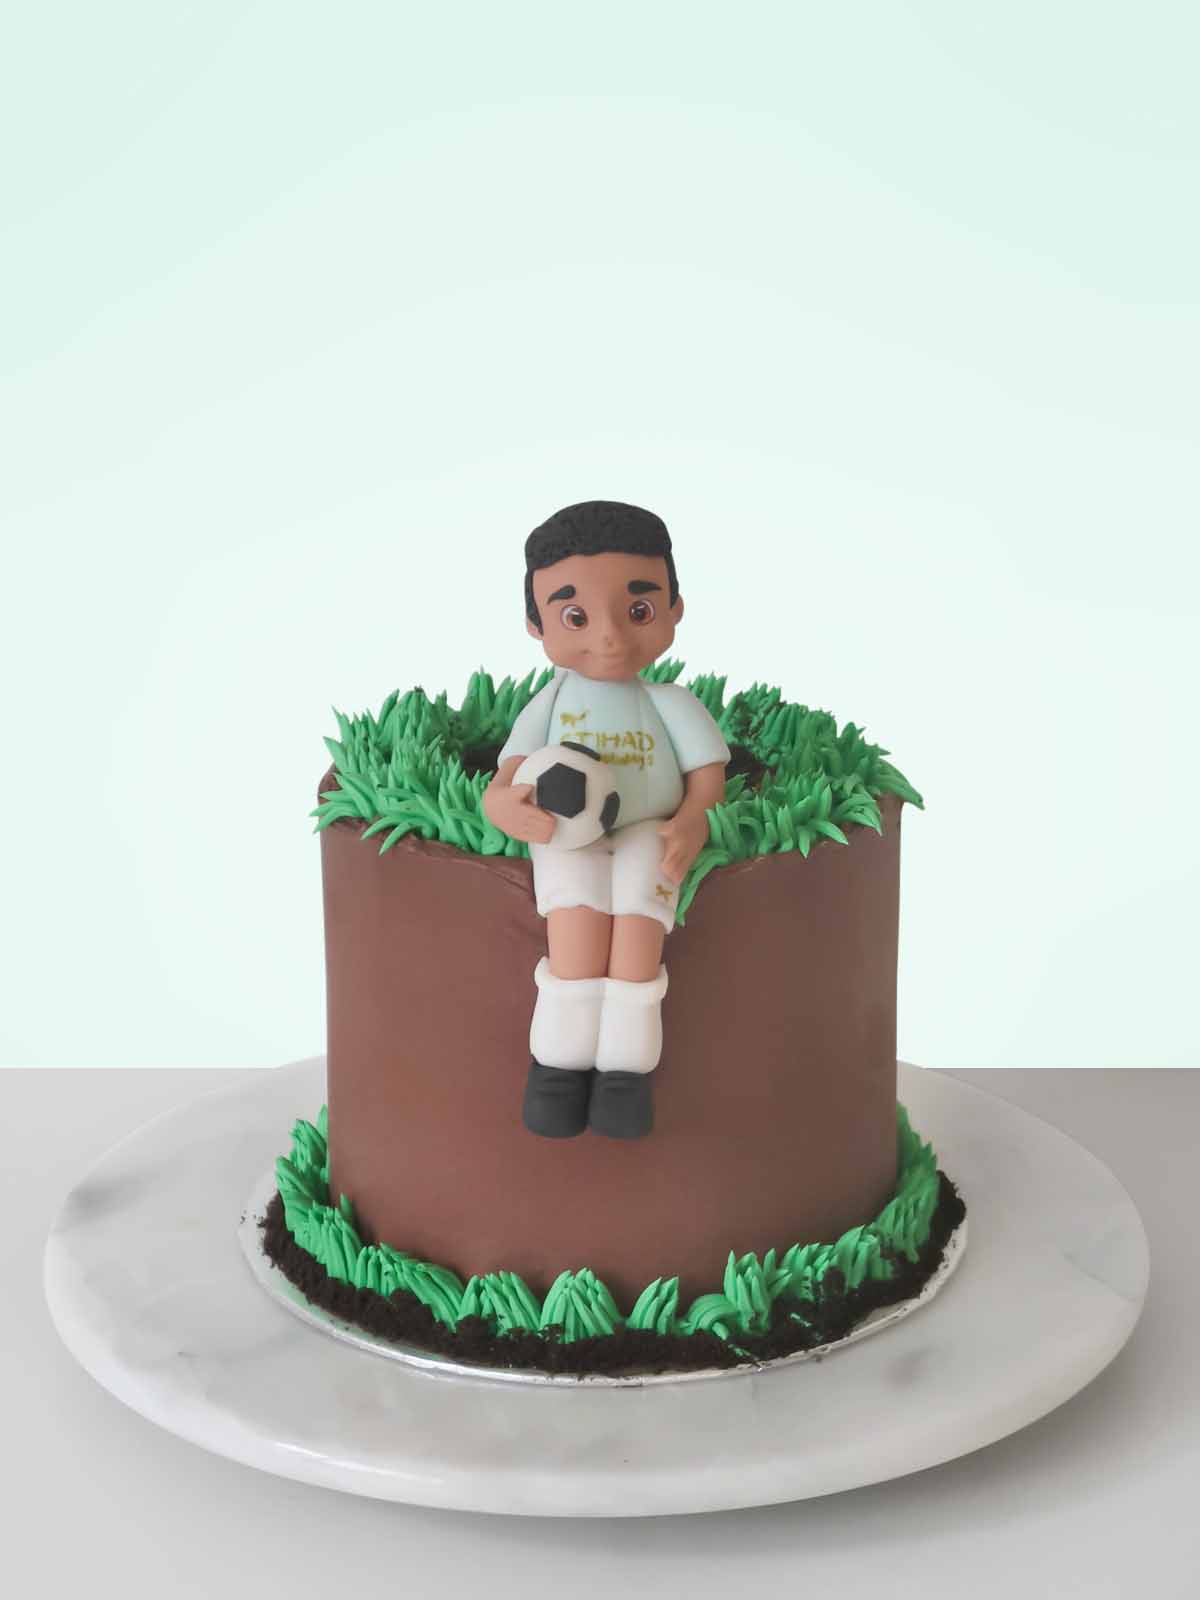 Personalised Footballer Birthday Cake Delivered Surrey London